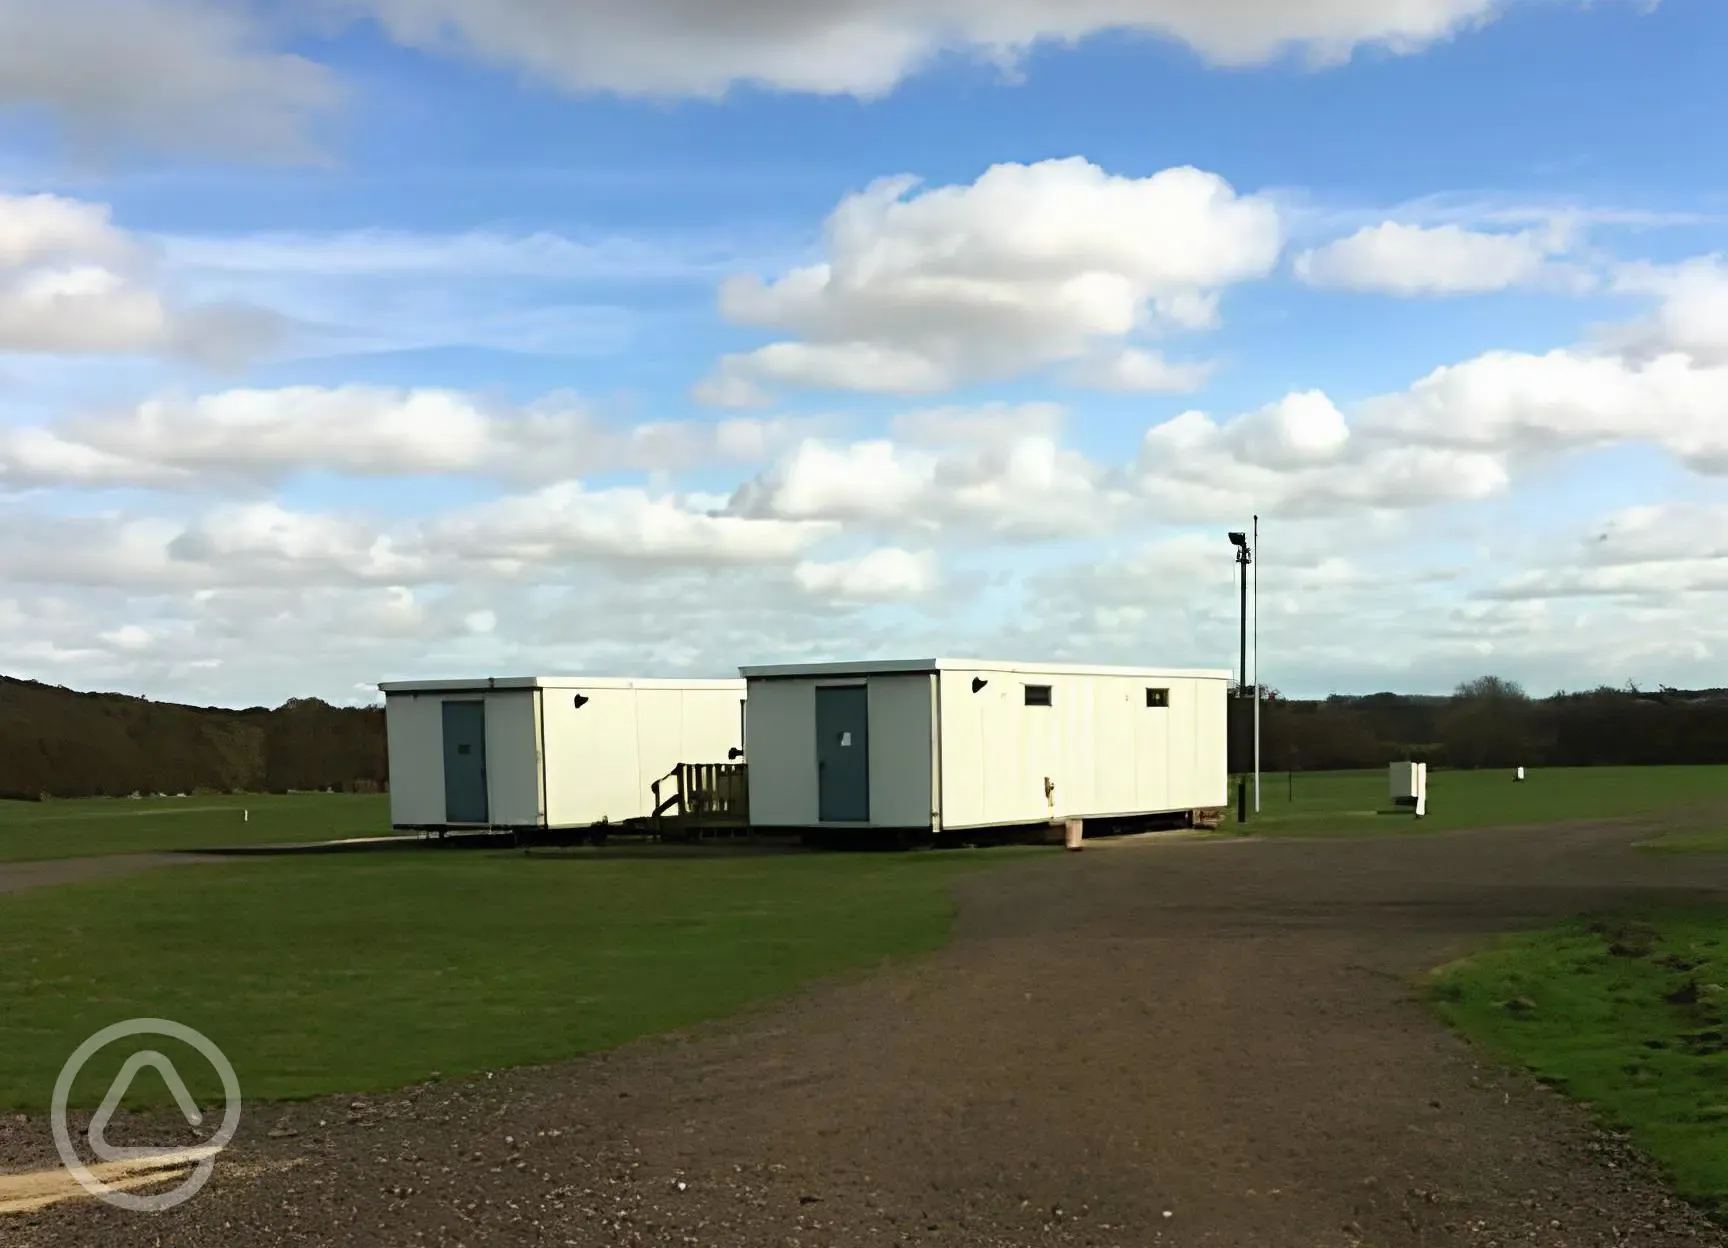 Touring facilities